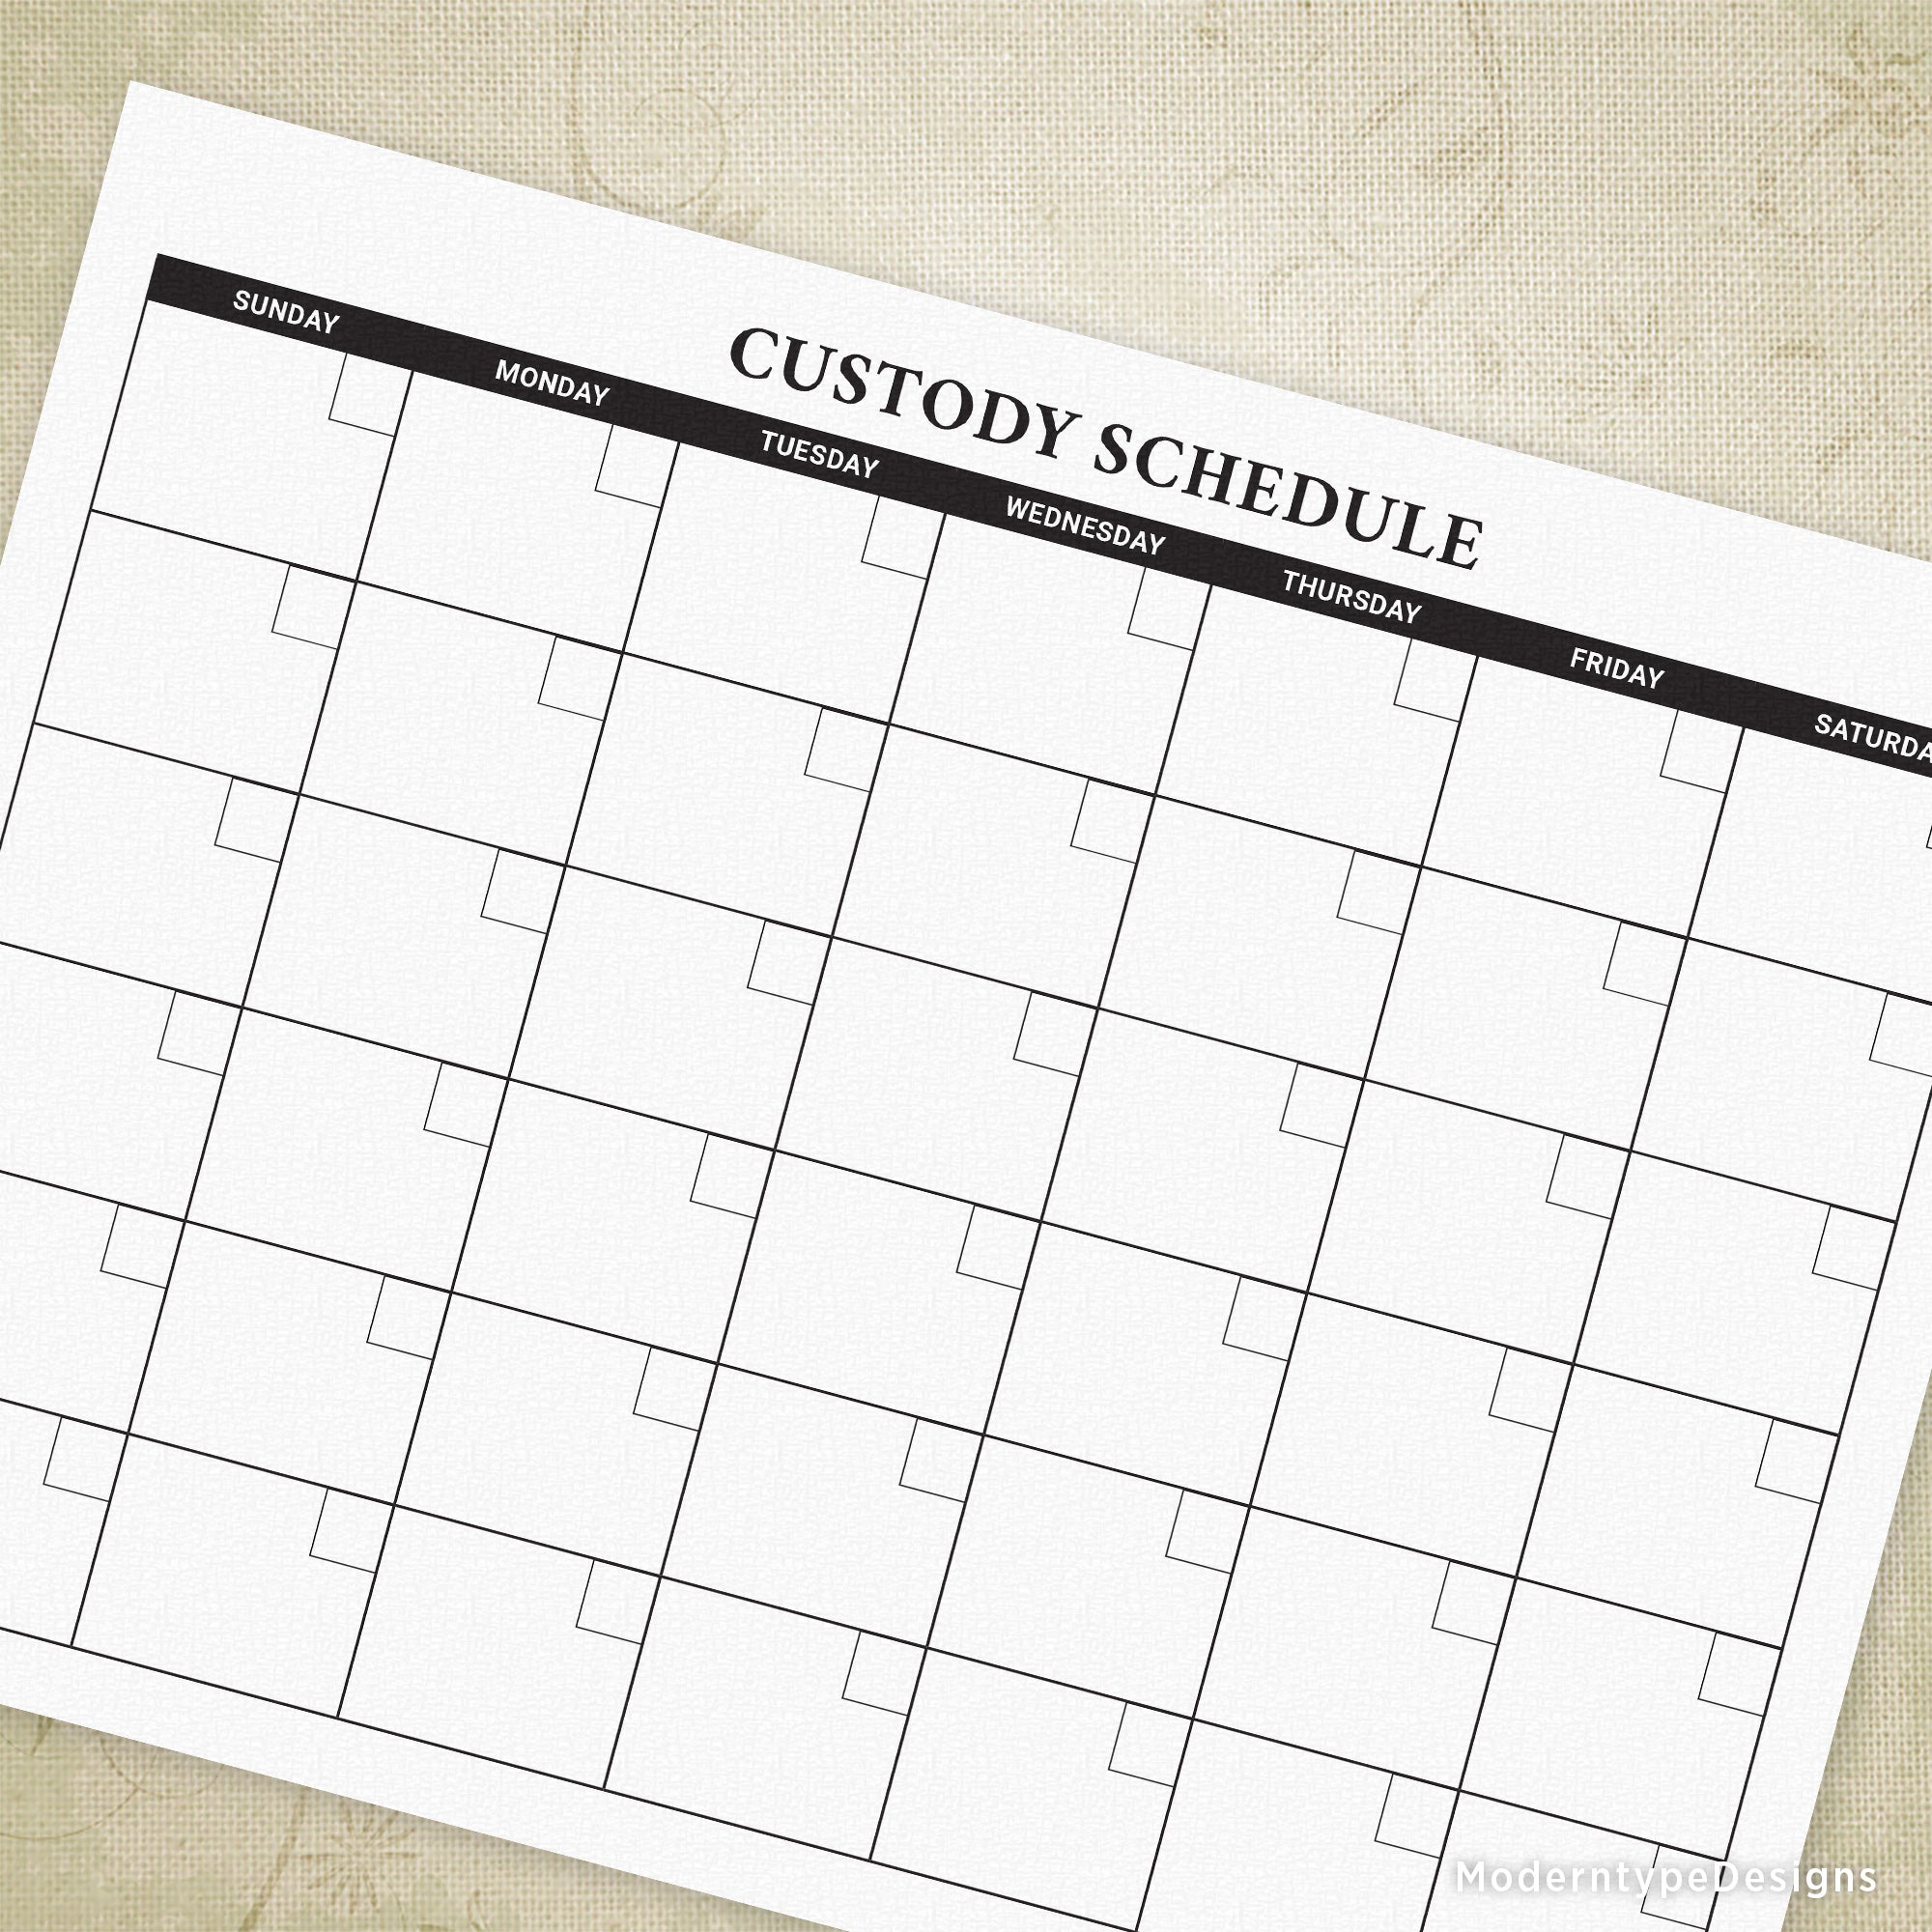 Custody Schedule Calendar Printable for Parents